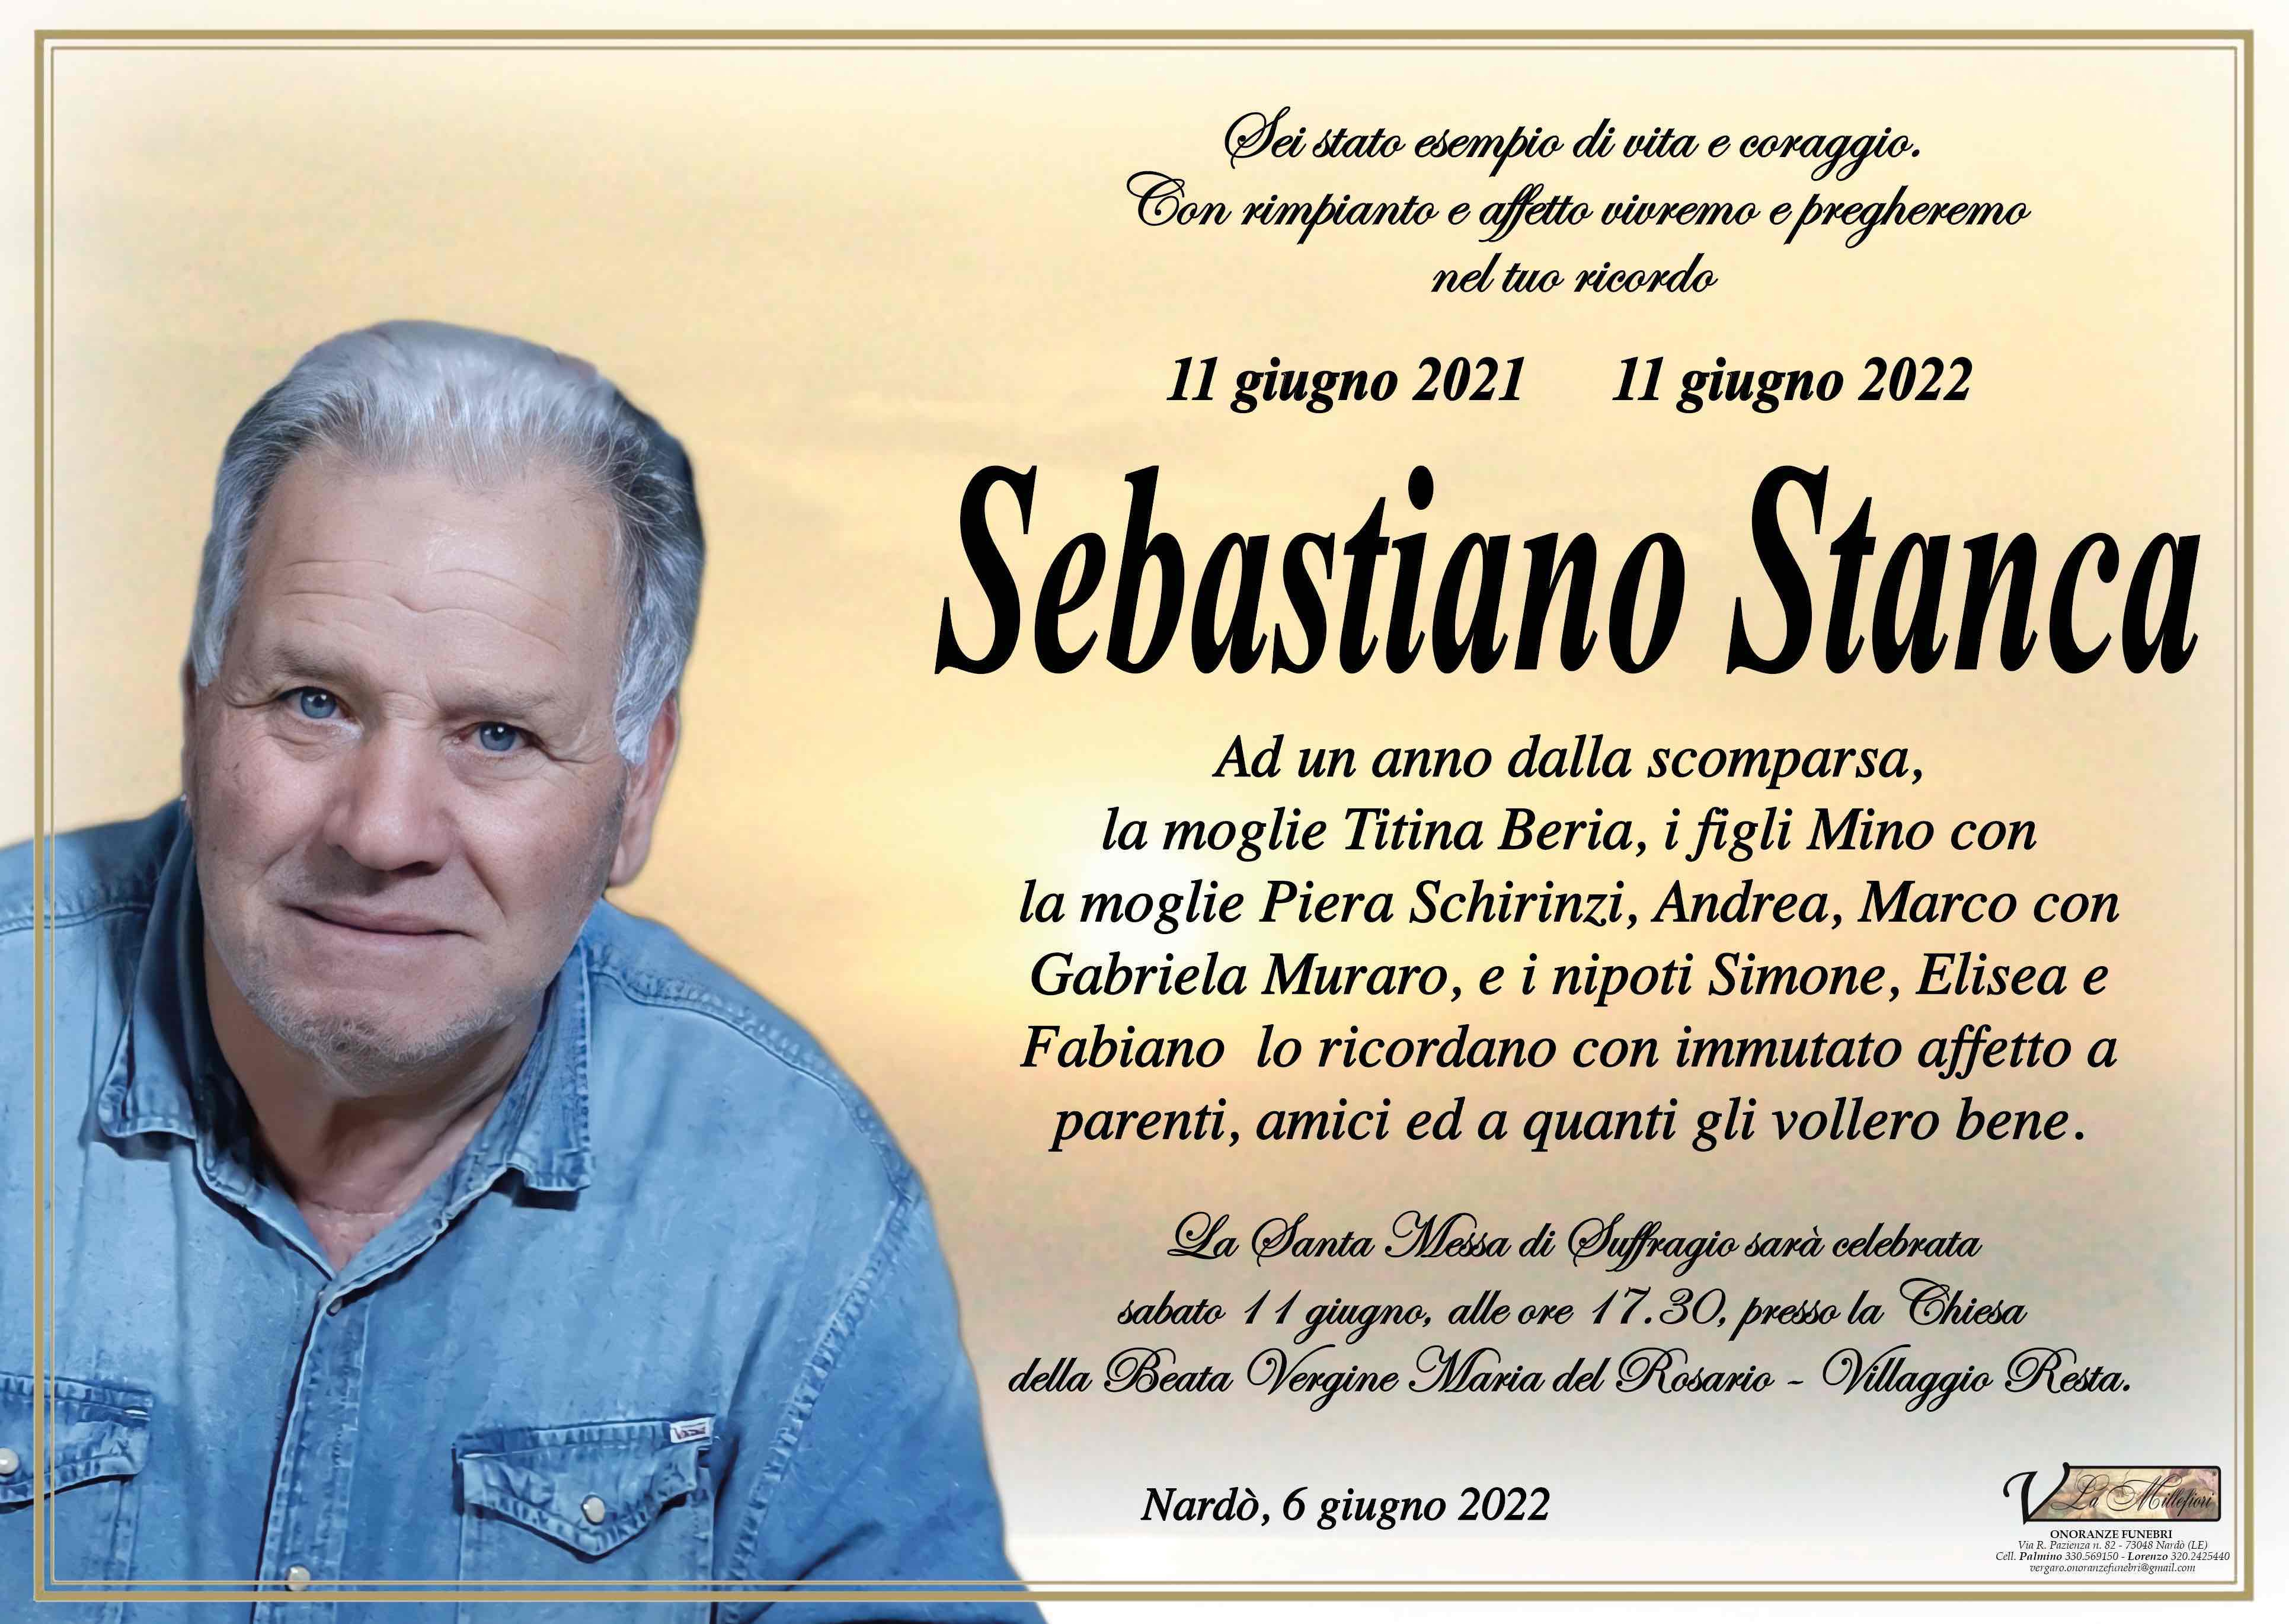 Sebastiano Stanca